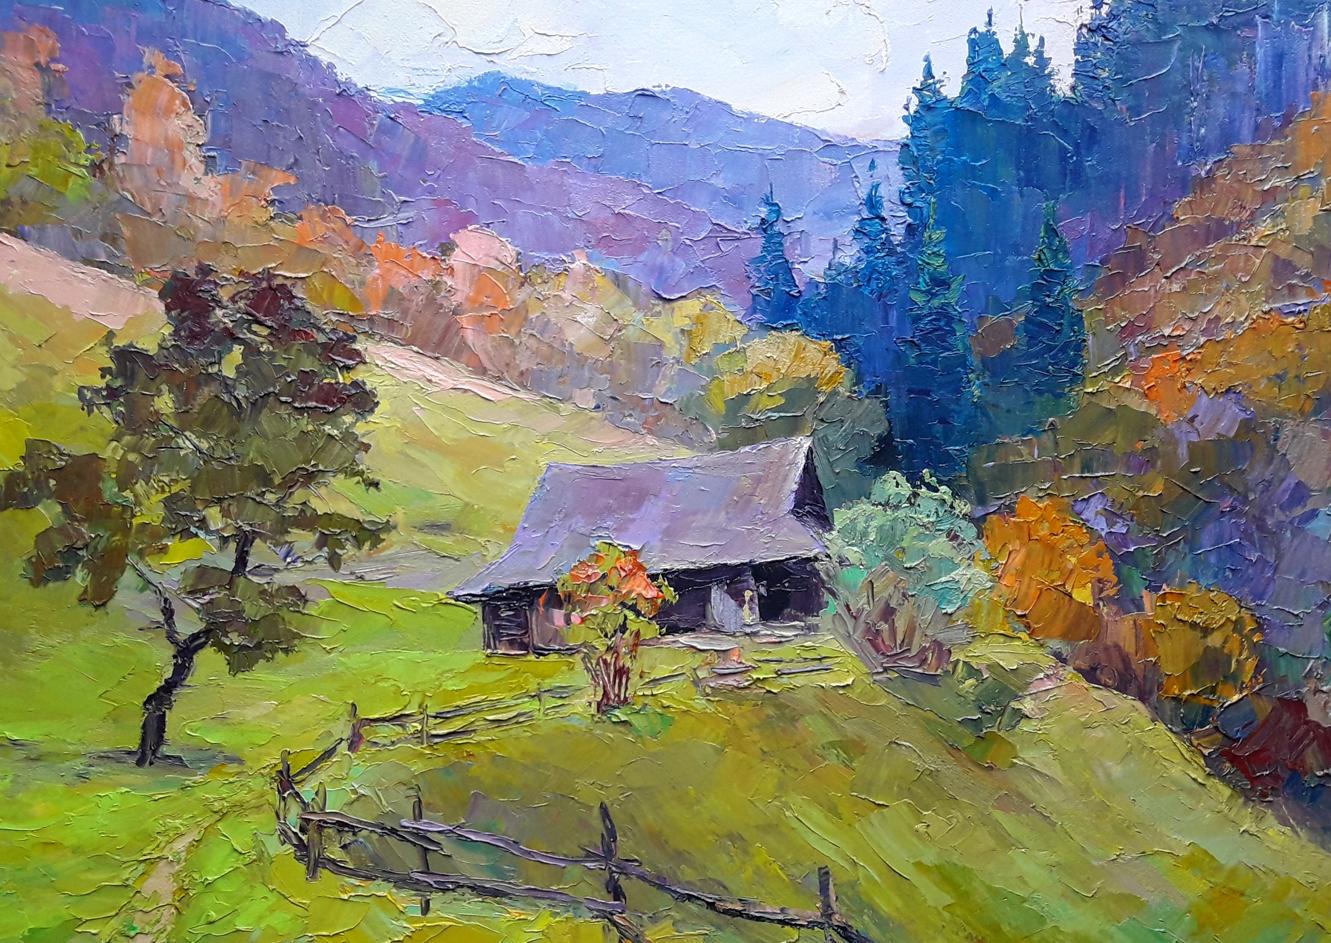 Boris Petrovich Serdyuk's oil artwork portrays the rich colors of the Carpathians